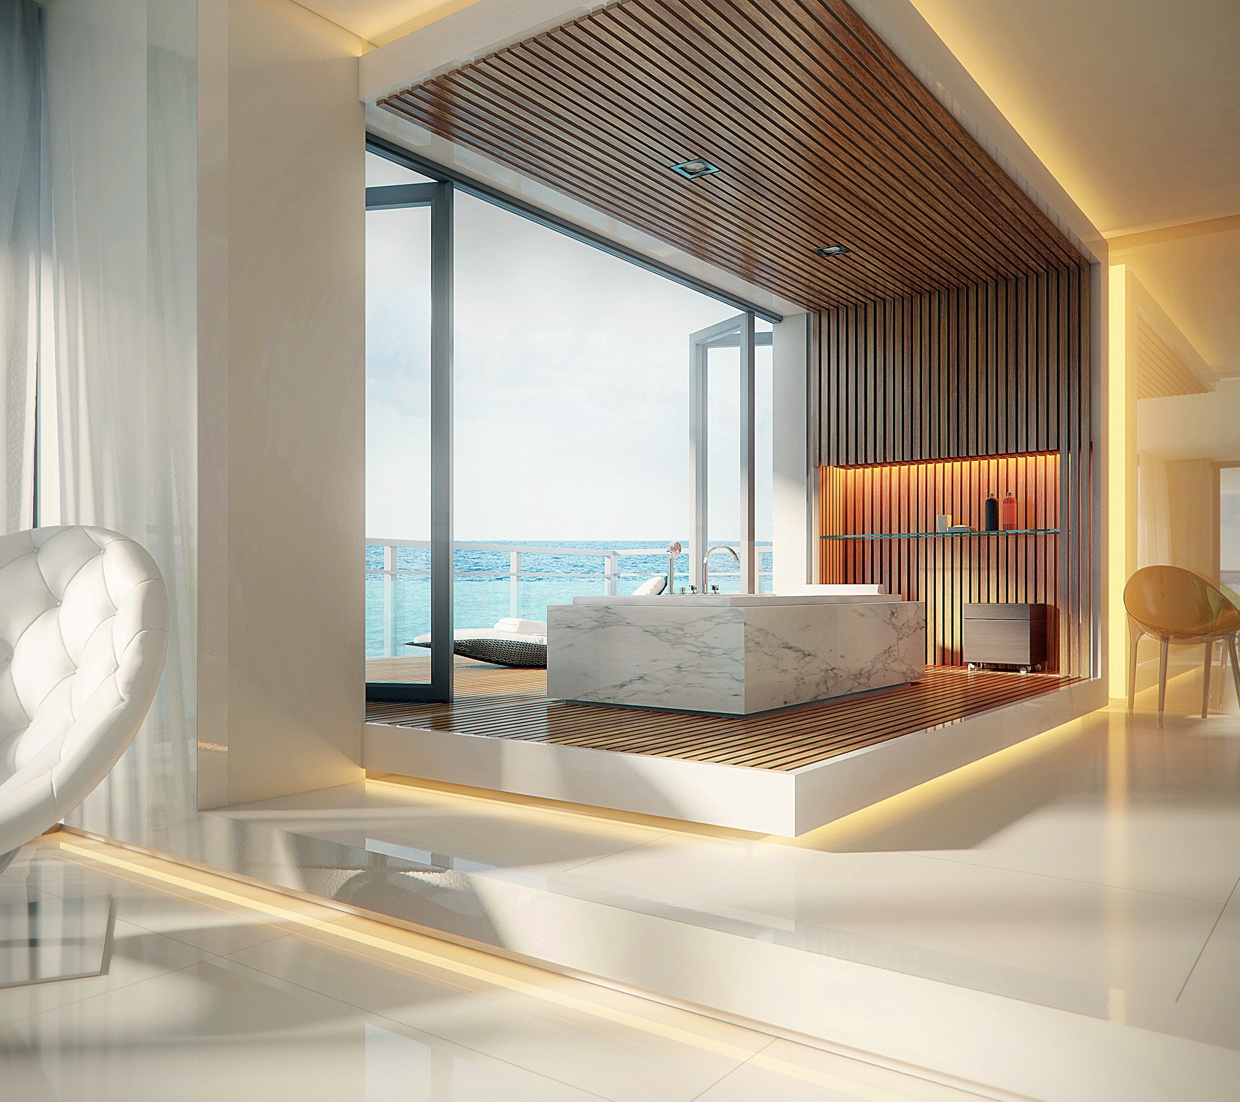 https://www.home-designing.com/wp-content/uploads/2014/10/ocean-view-bath.jpg